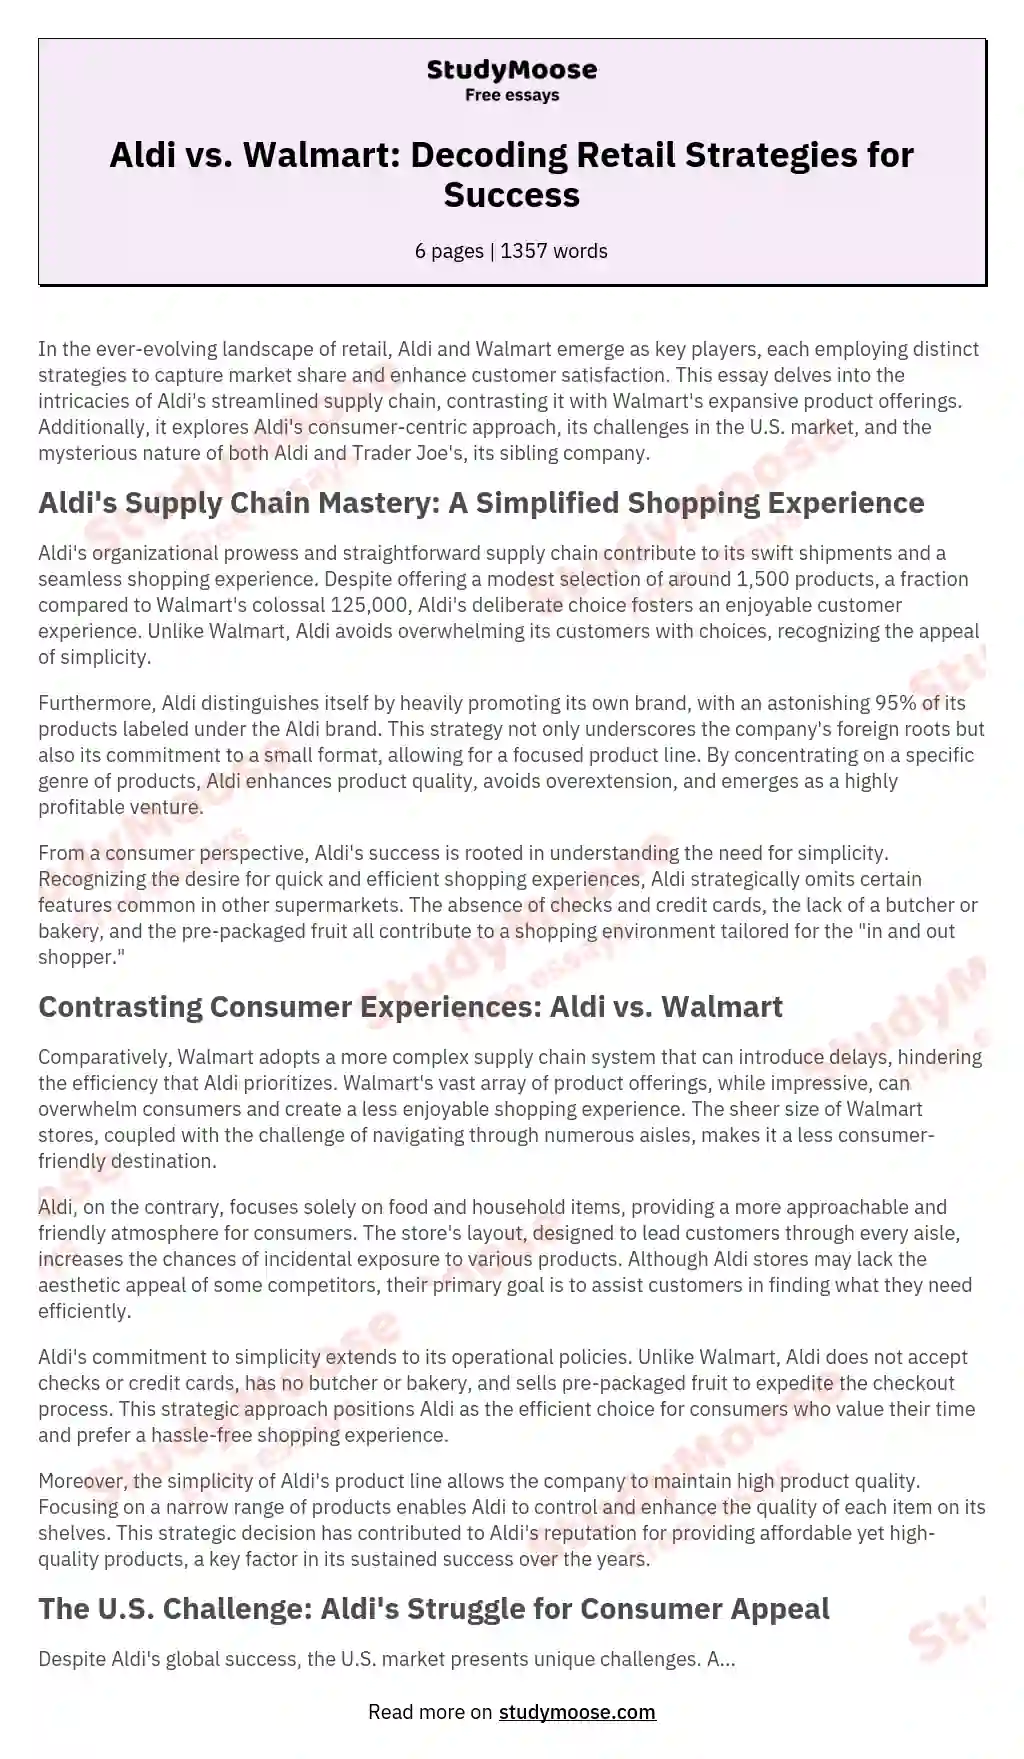 Aldi vs. Walmart: Decoding Retail Strategies for Success essay